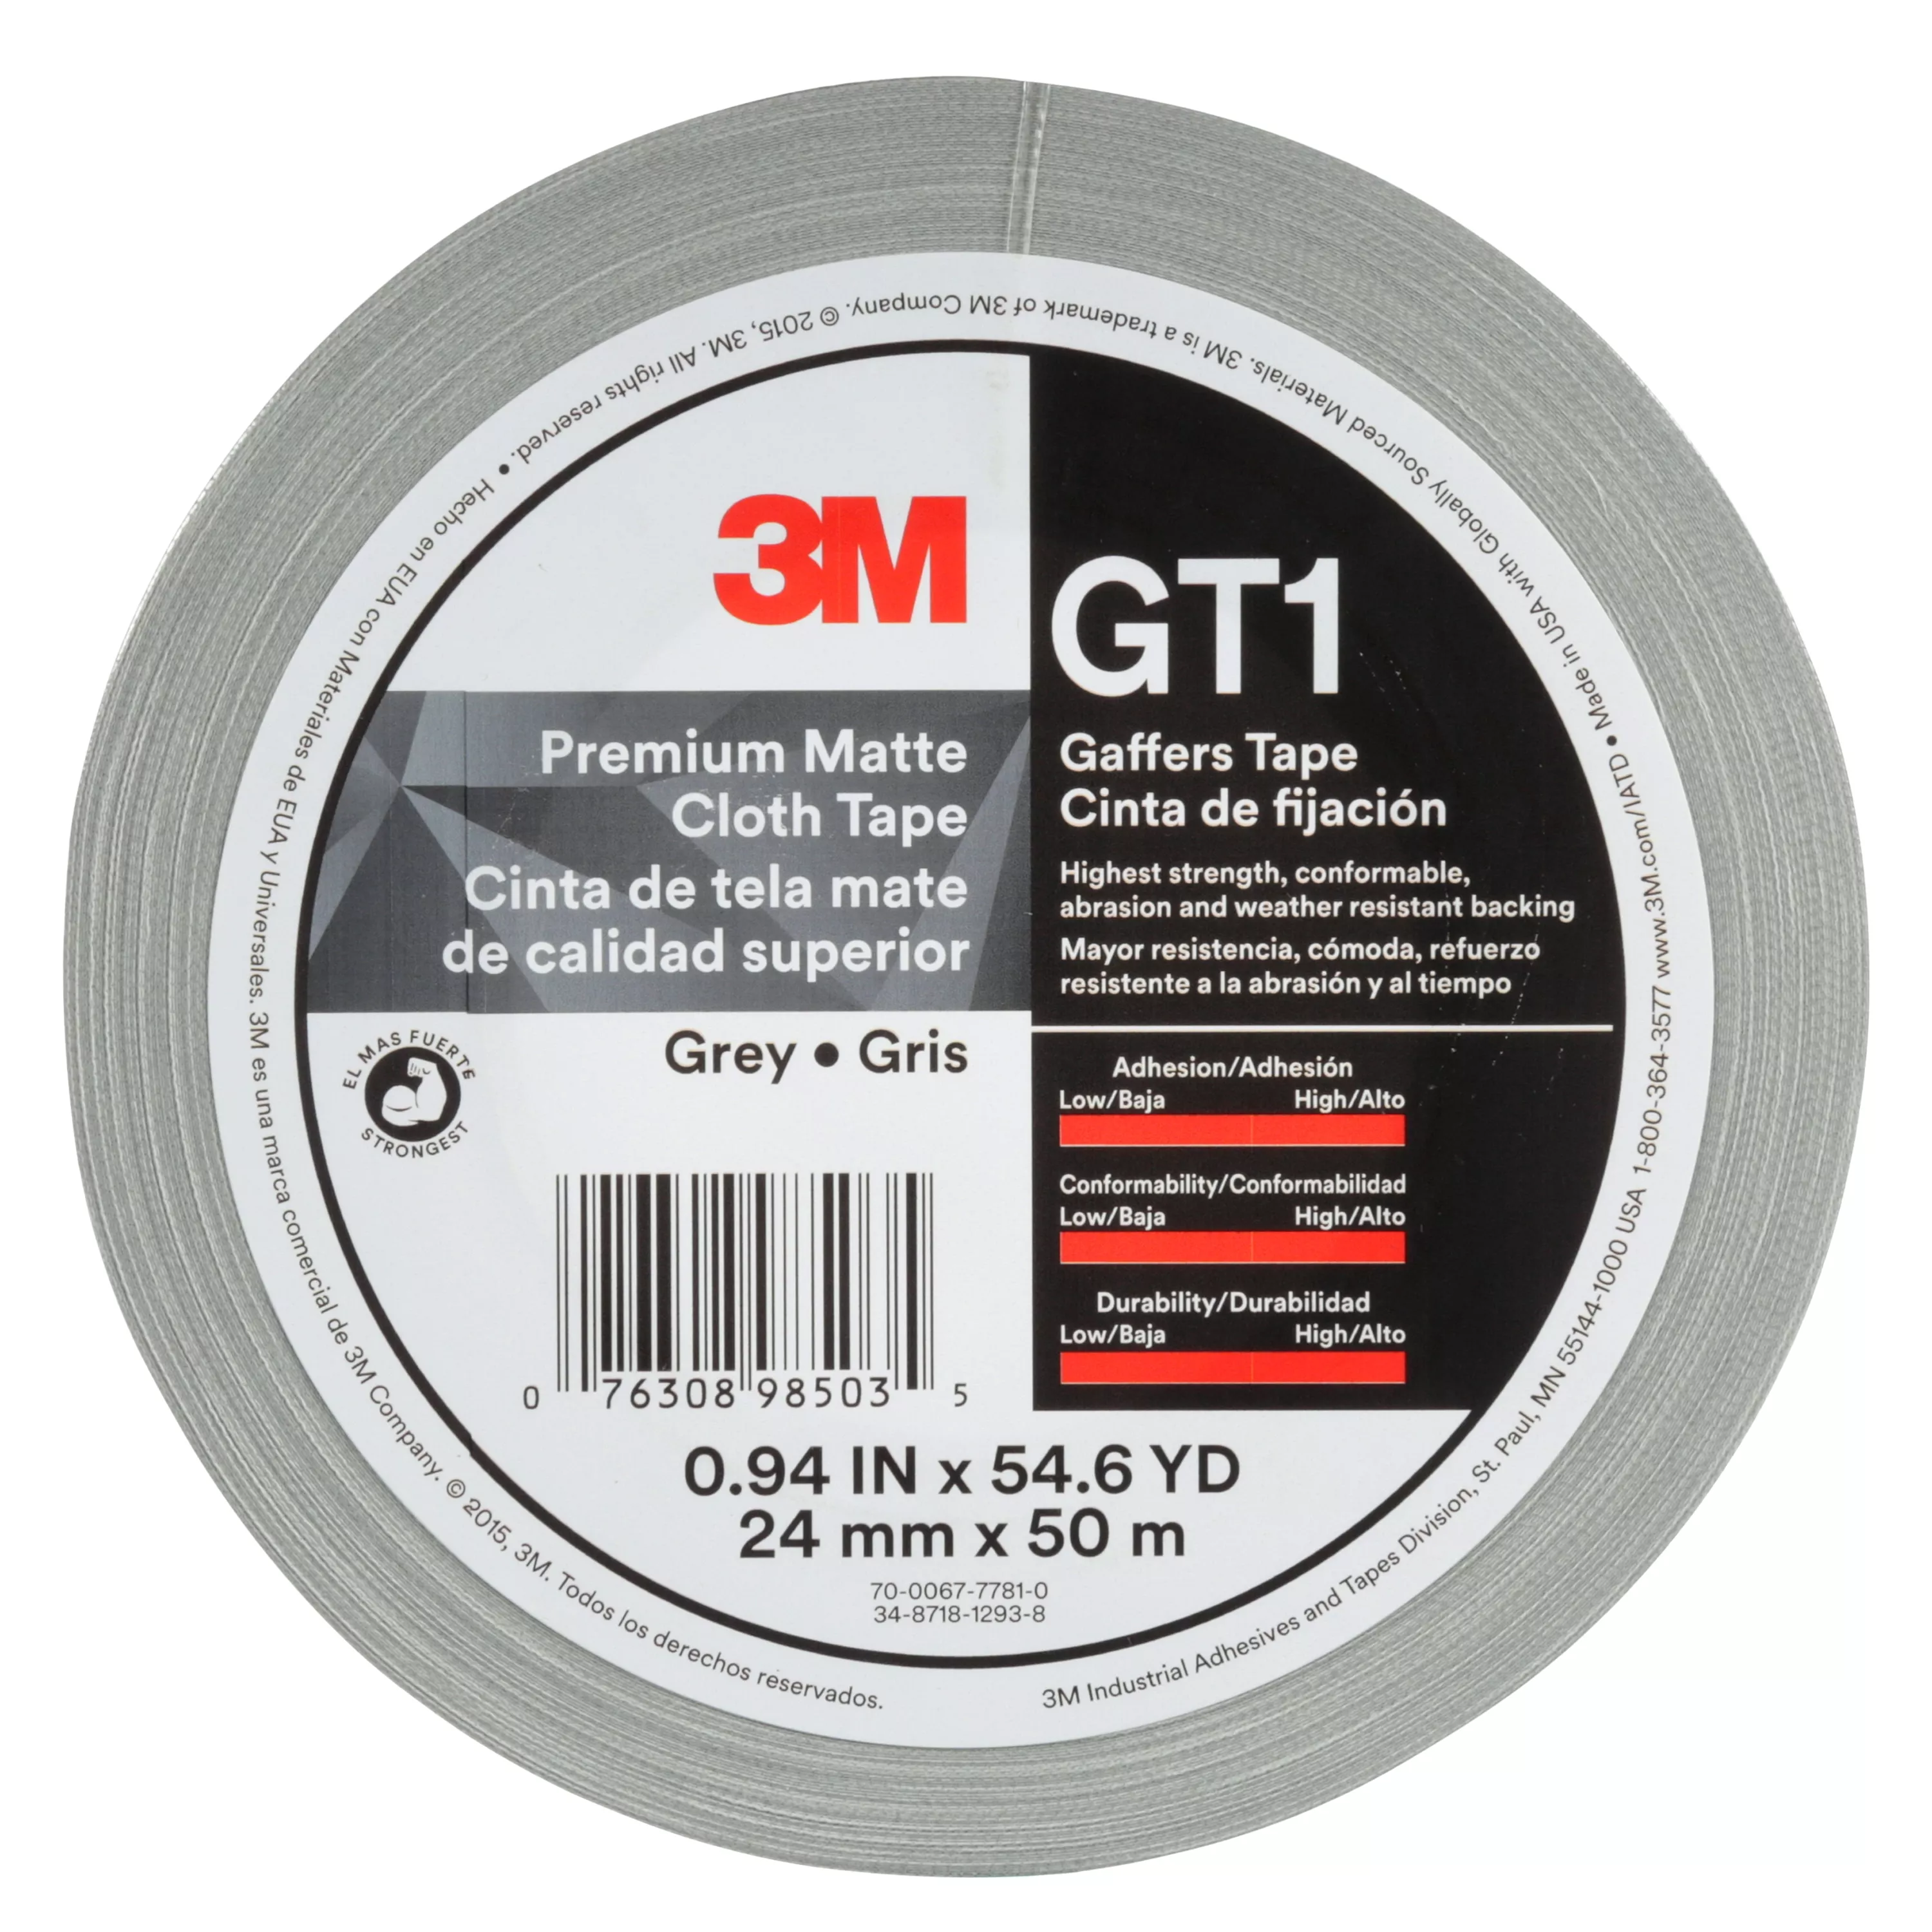 UPC 00076308985035 | 3M™ Premium Matte Cloth (Gaffers) Tape GT1